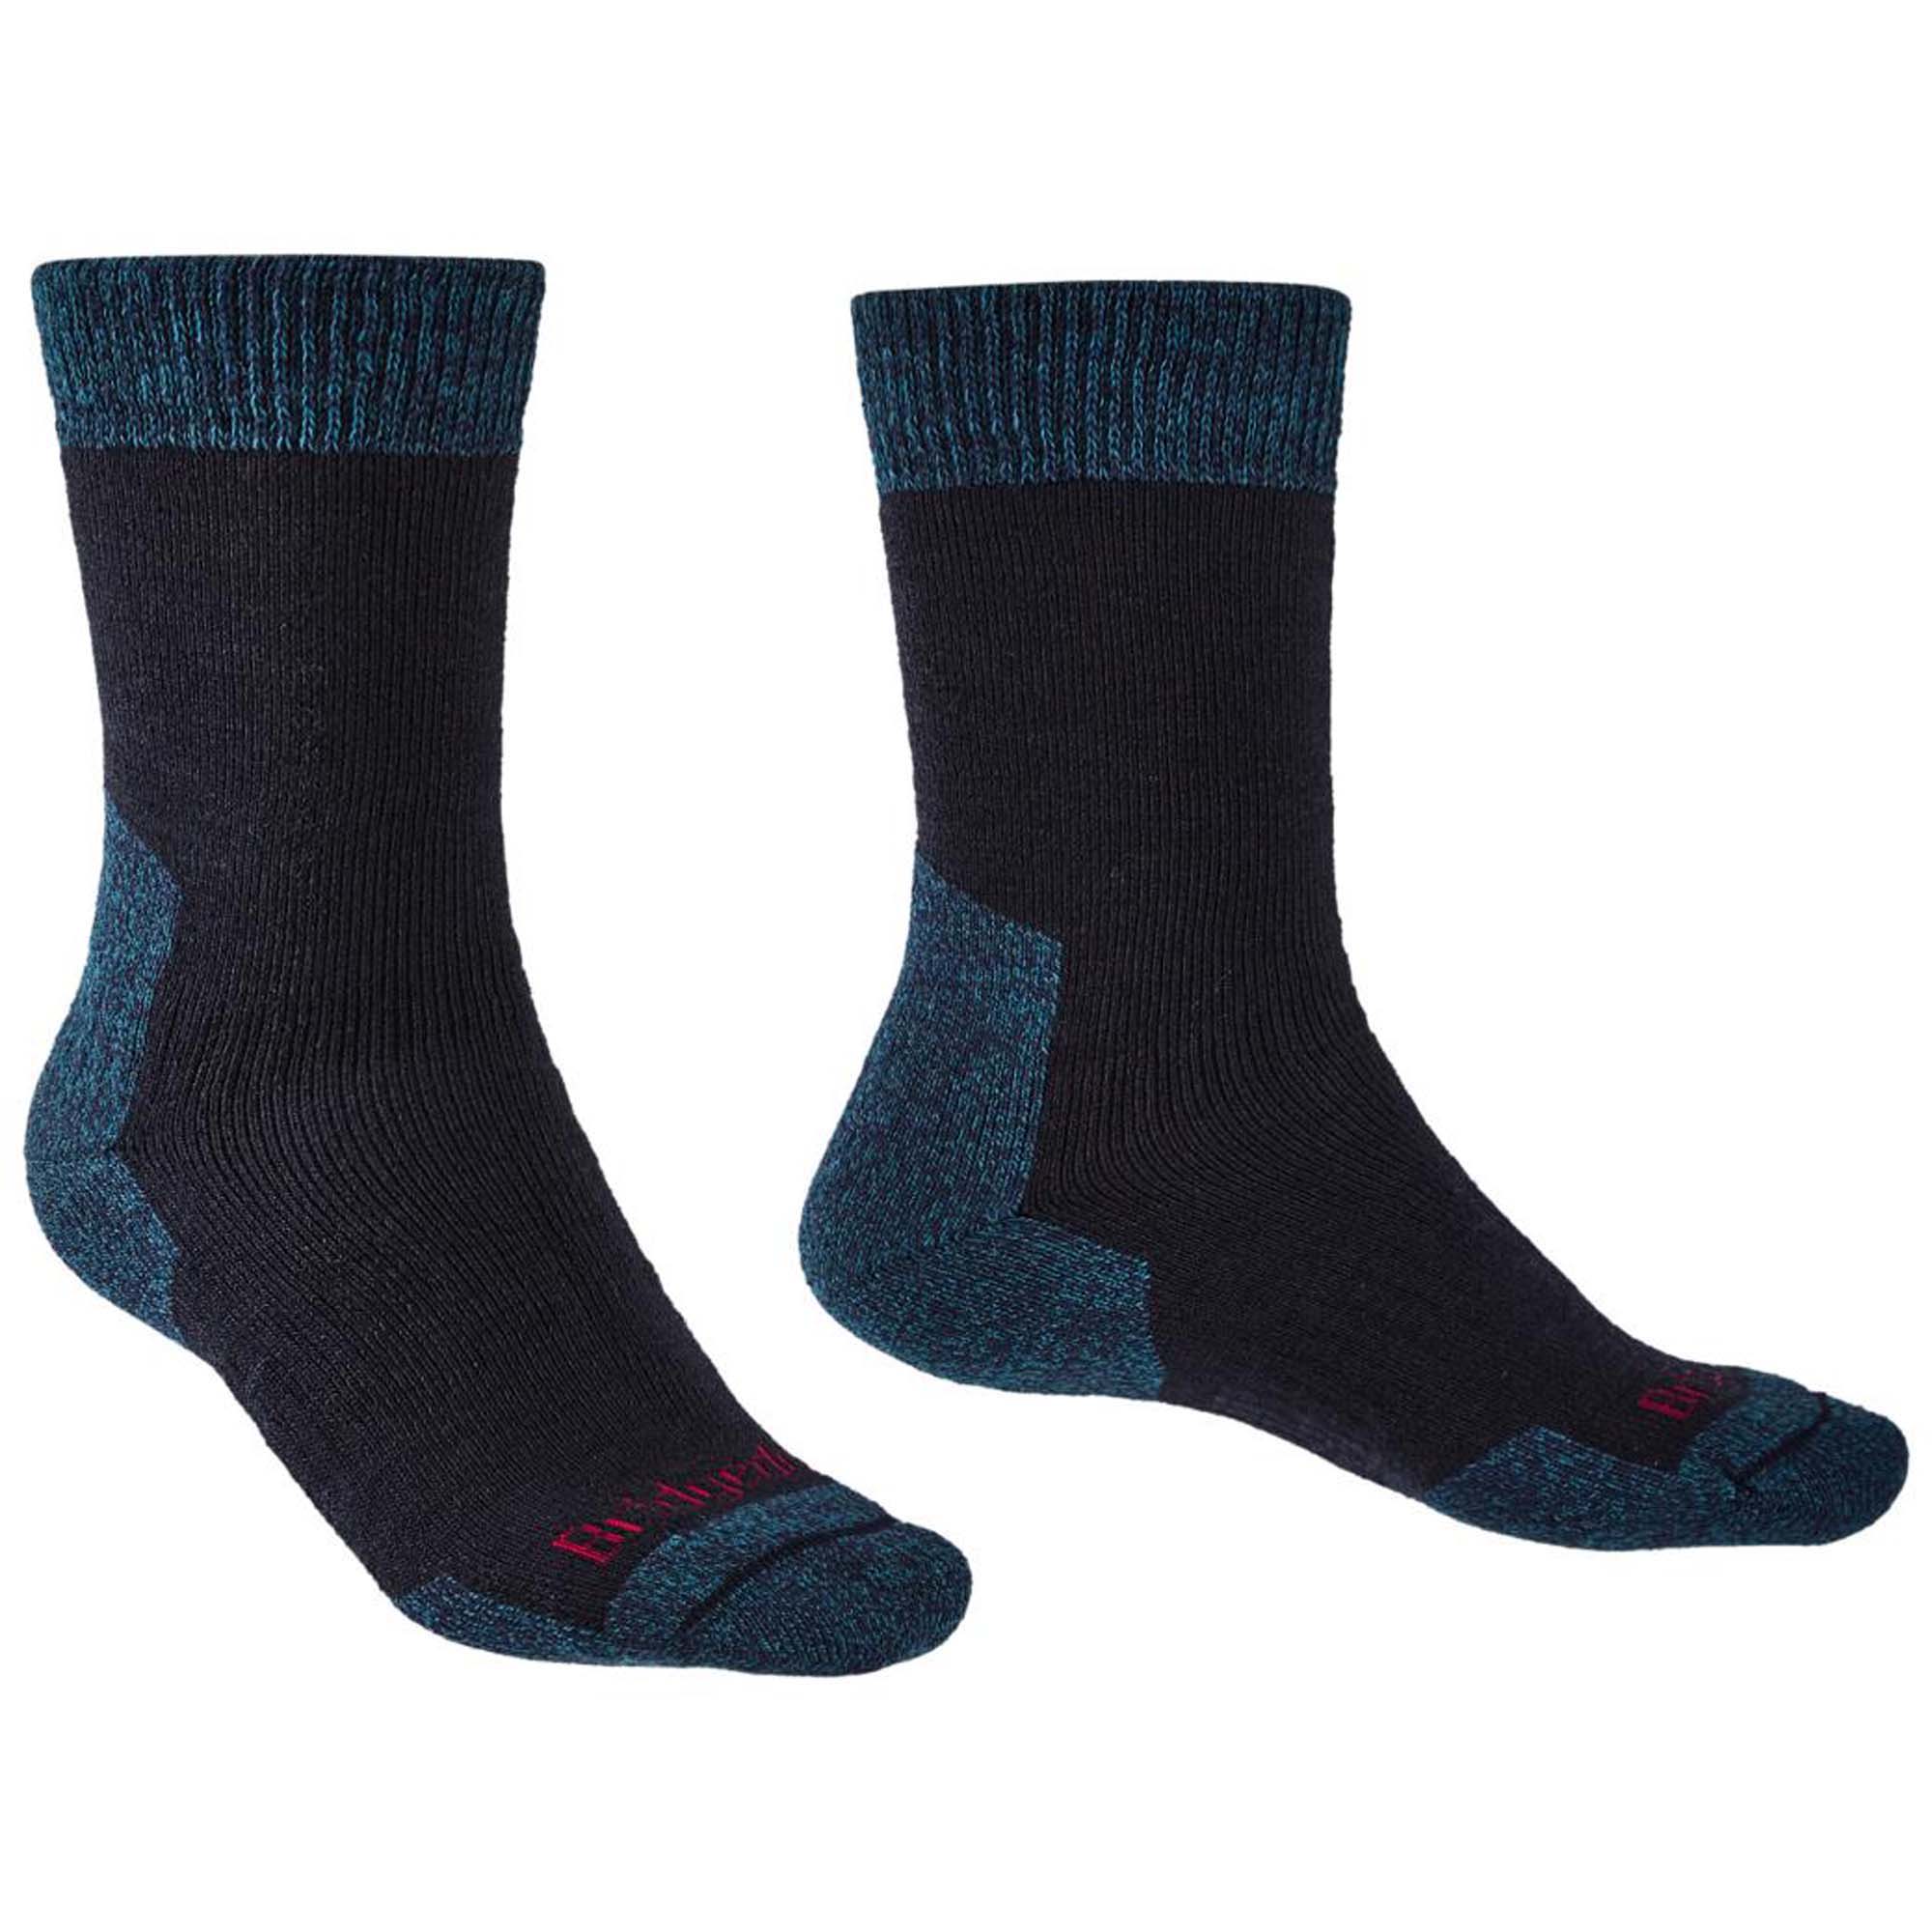 Bridgedale Explorer Heavyweight Merino Comfort Men's Hiking Socks